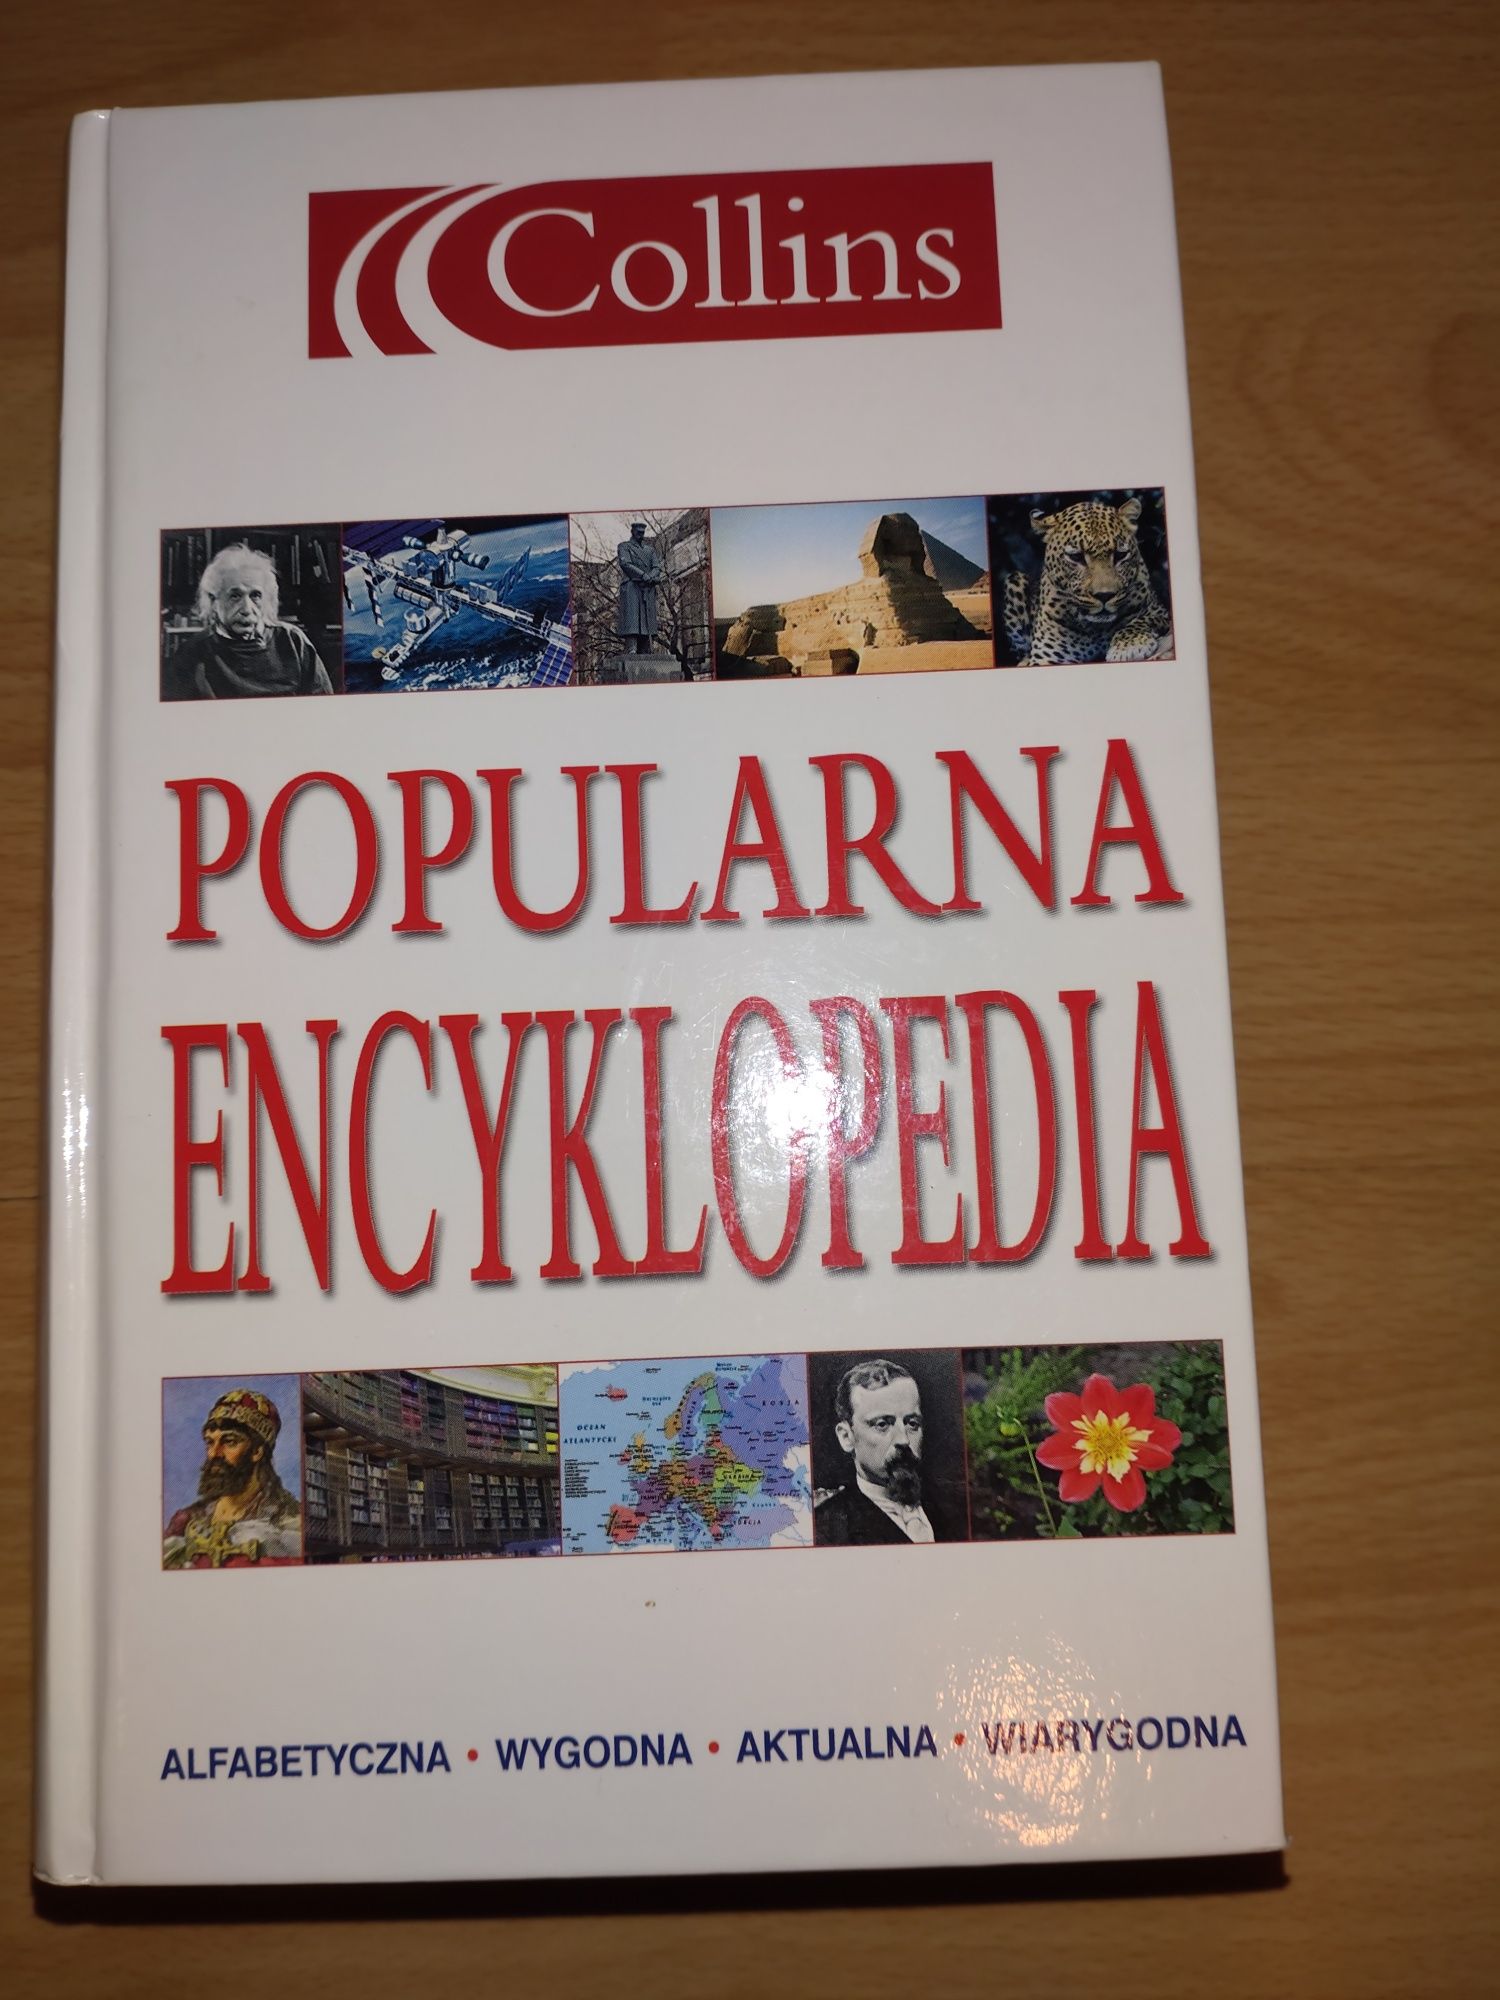 Popularna encyklopedia Collins